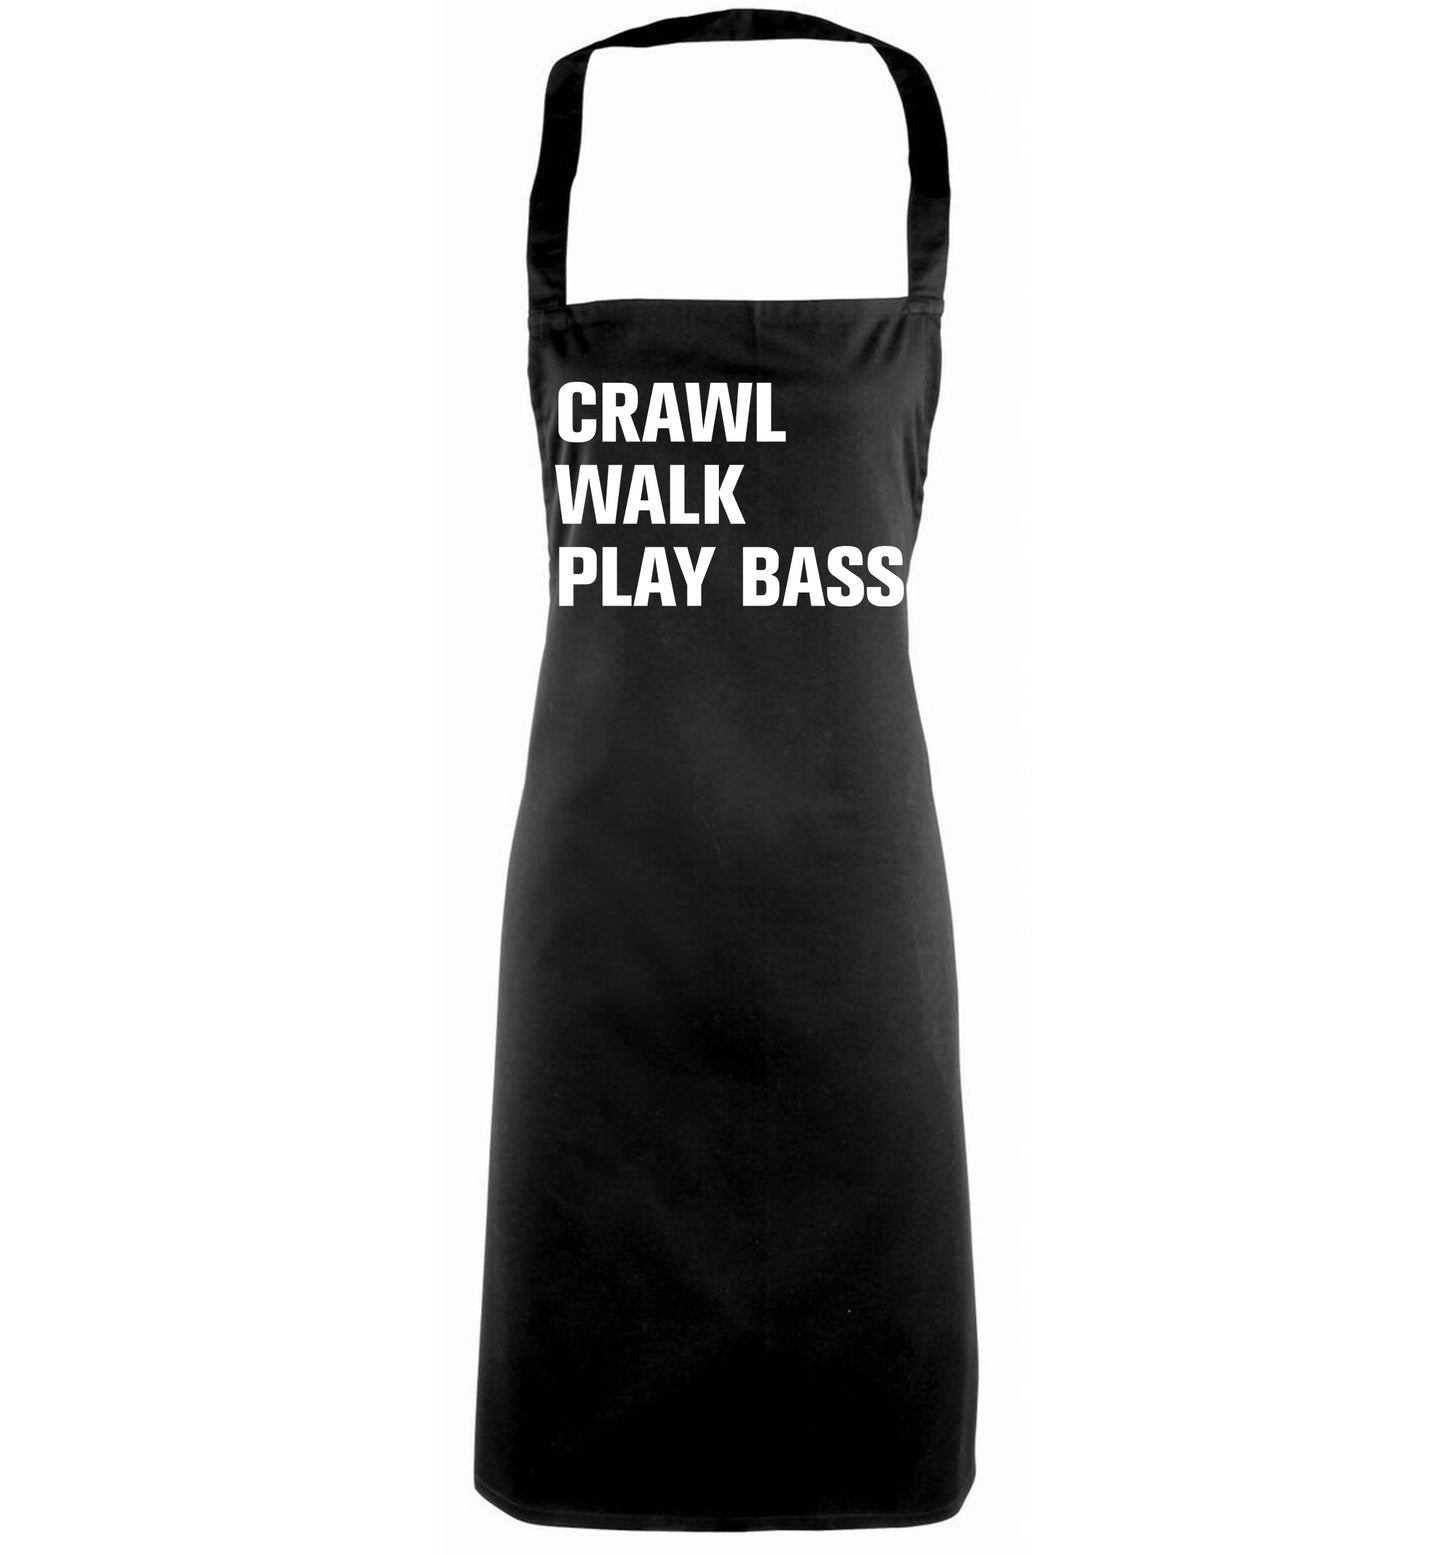 Crawl Walk Play Bass black apron